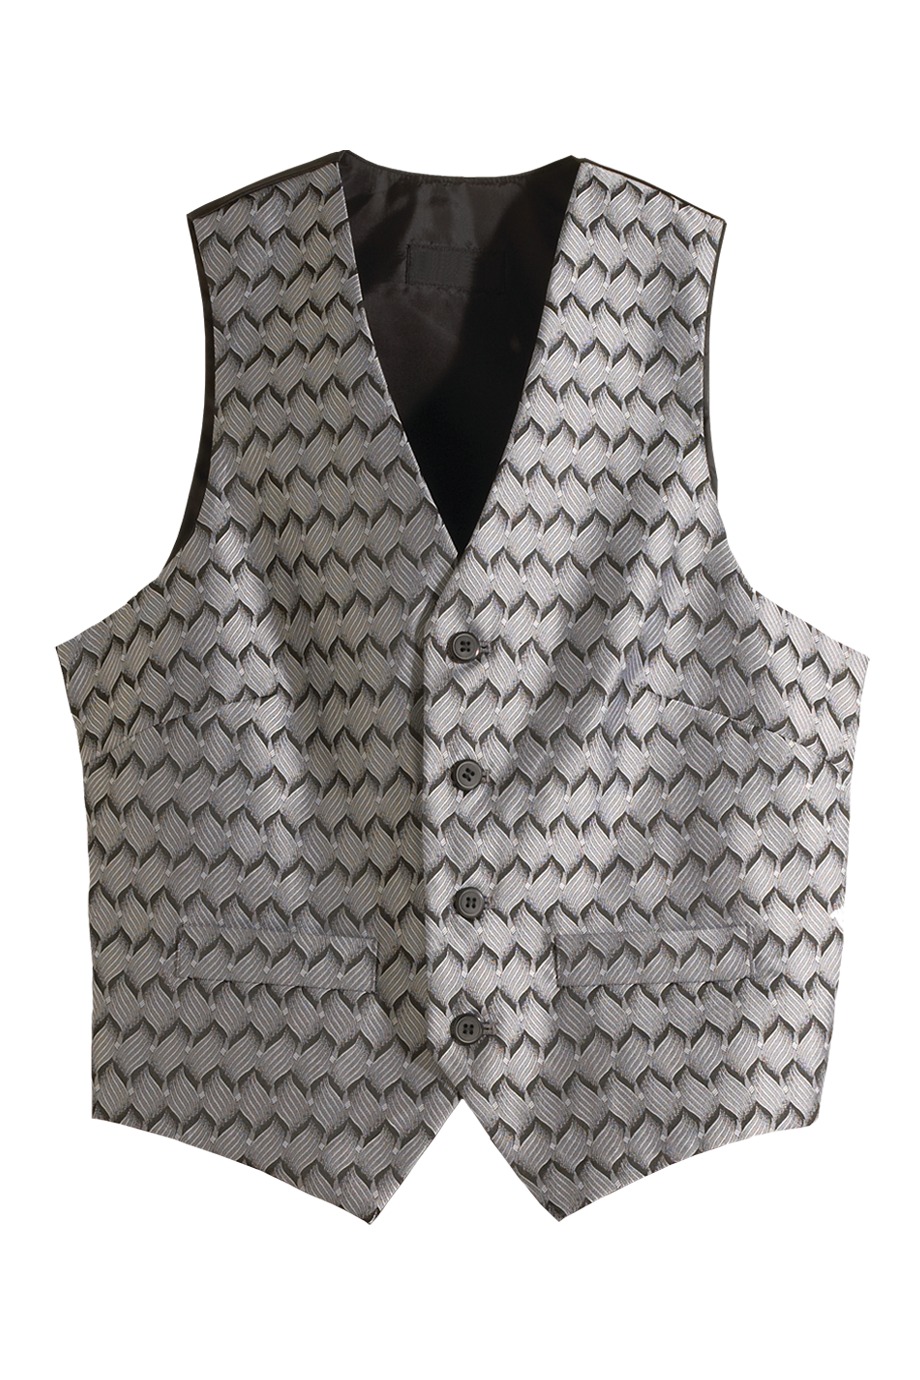 Edwards Garment 4391 - Men's Swirl Brocade Vest